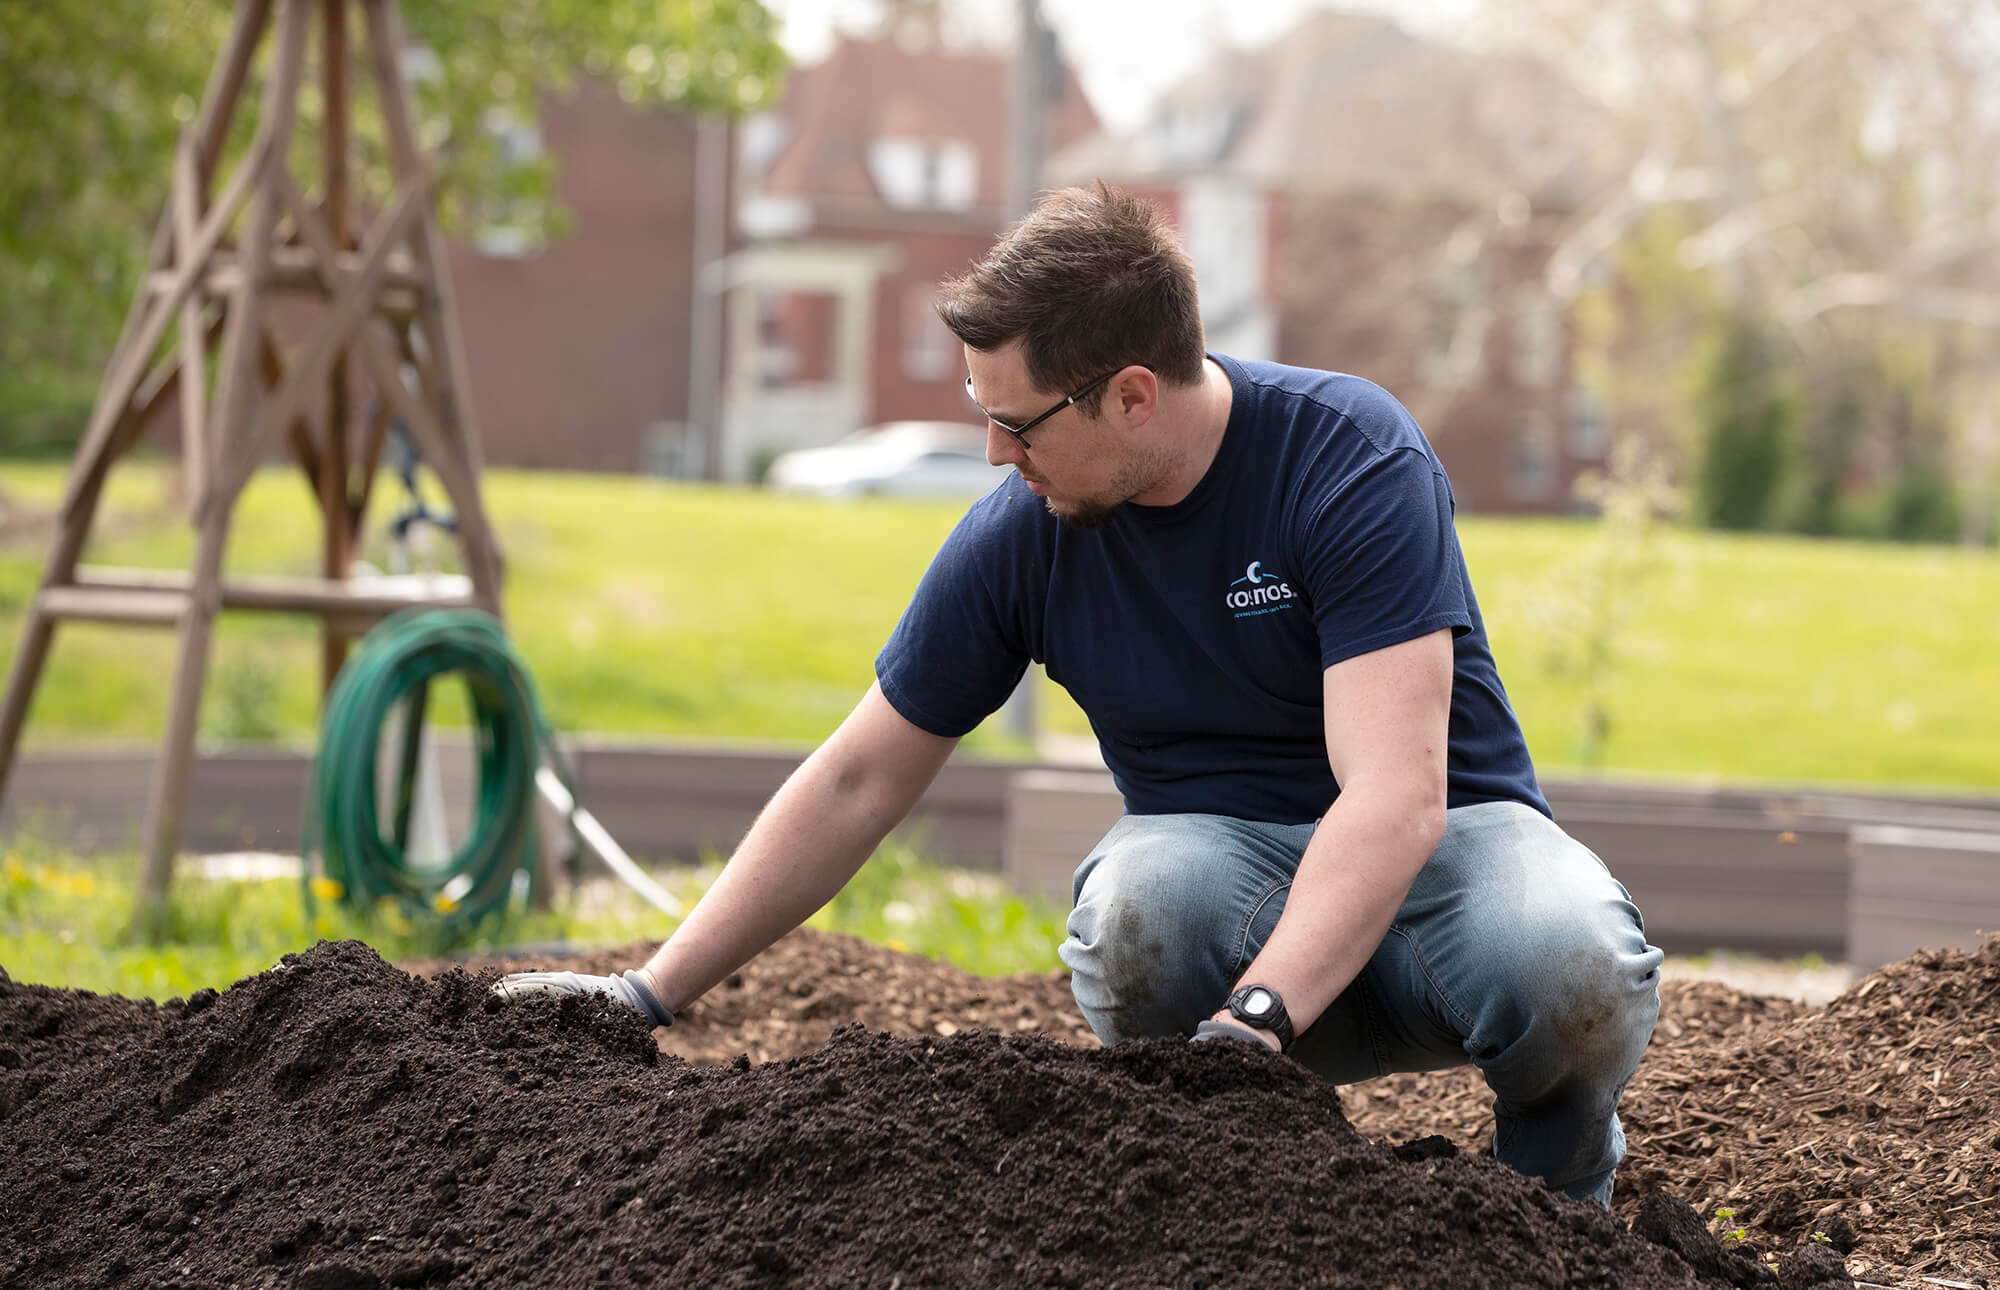 Cosmos employee preparing dirt for planting